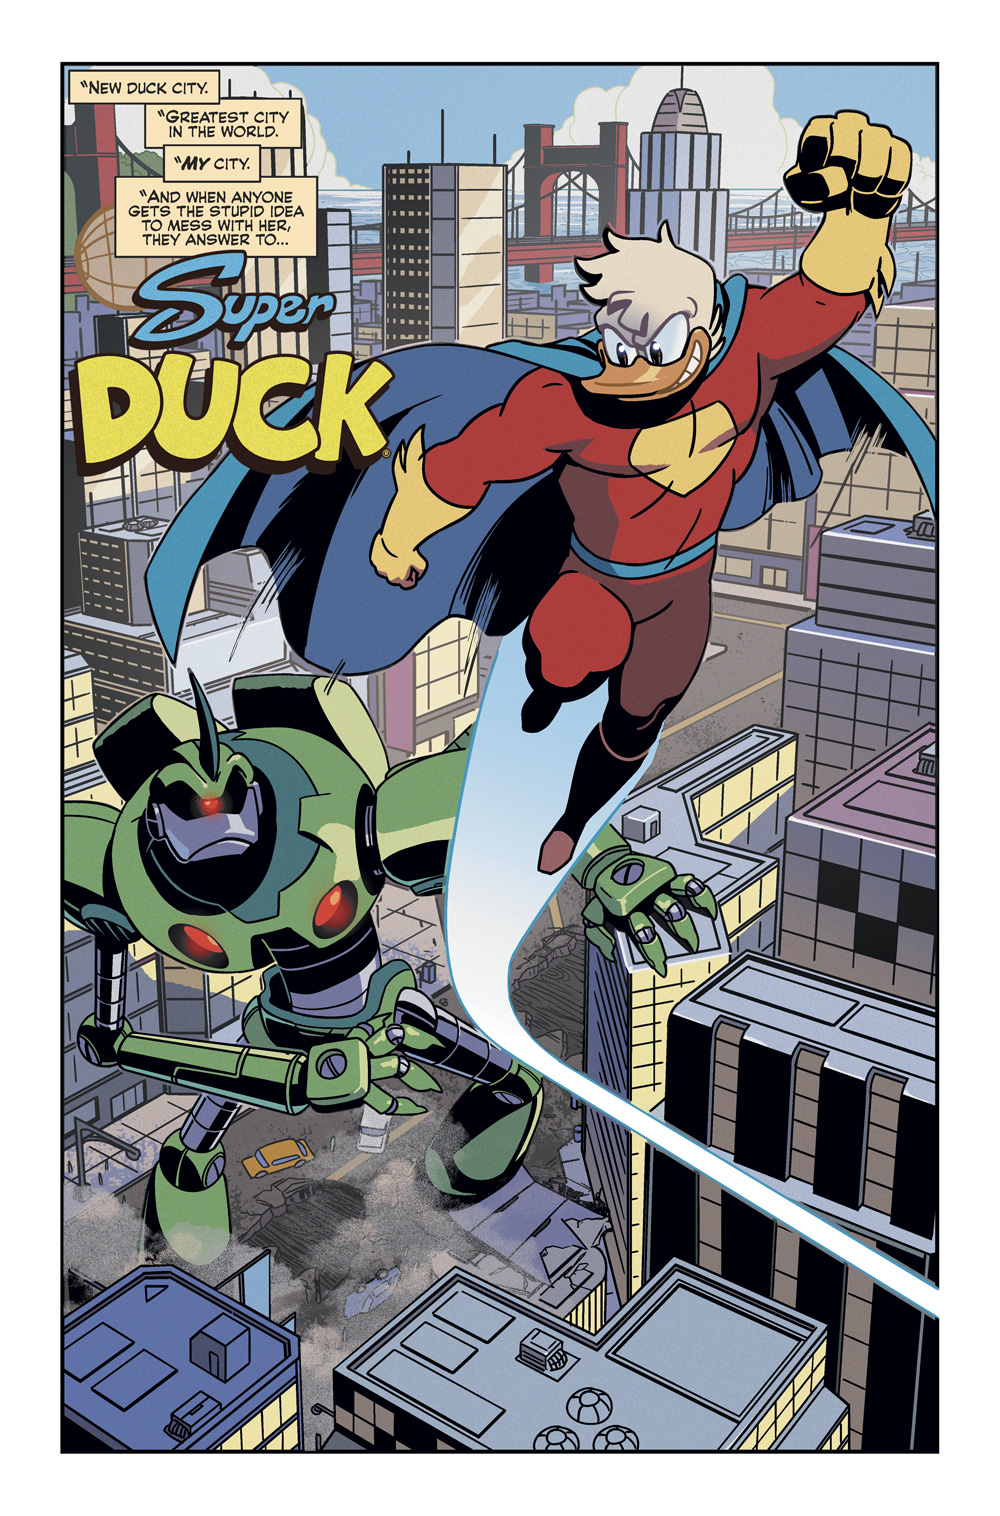 SUPER DUCK #1 (OF 4) - Archie Comics